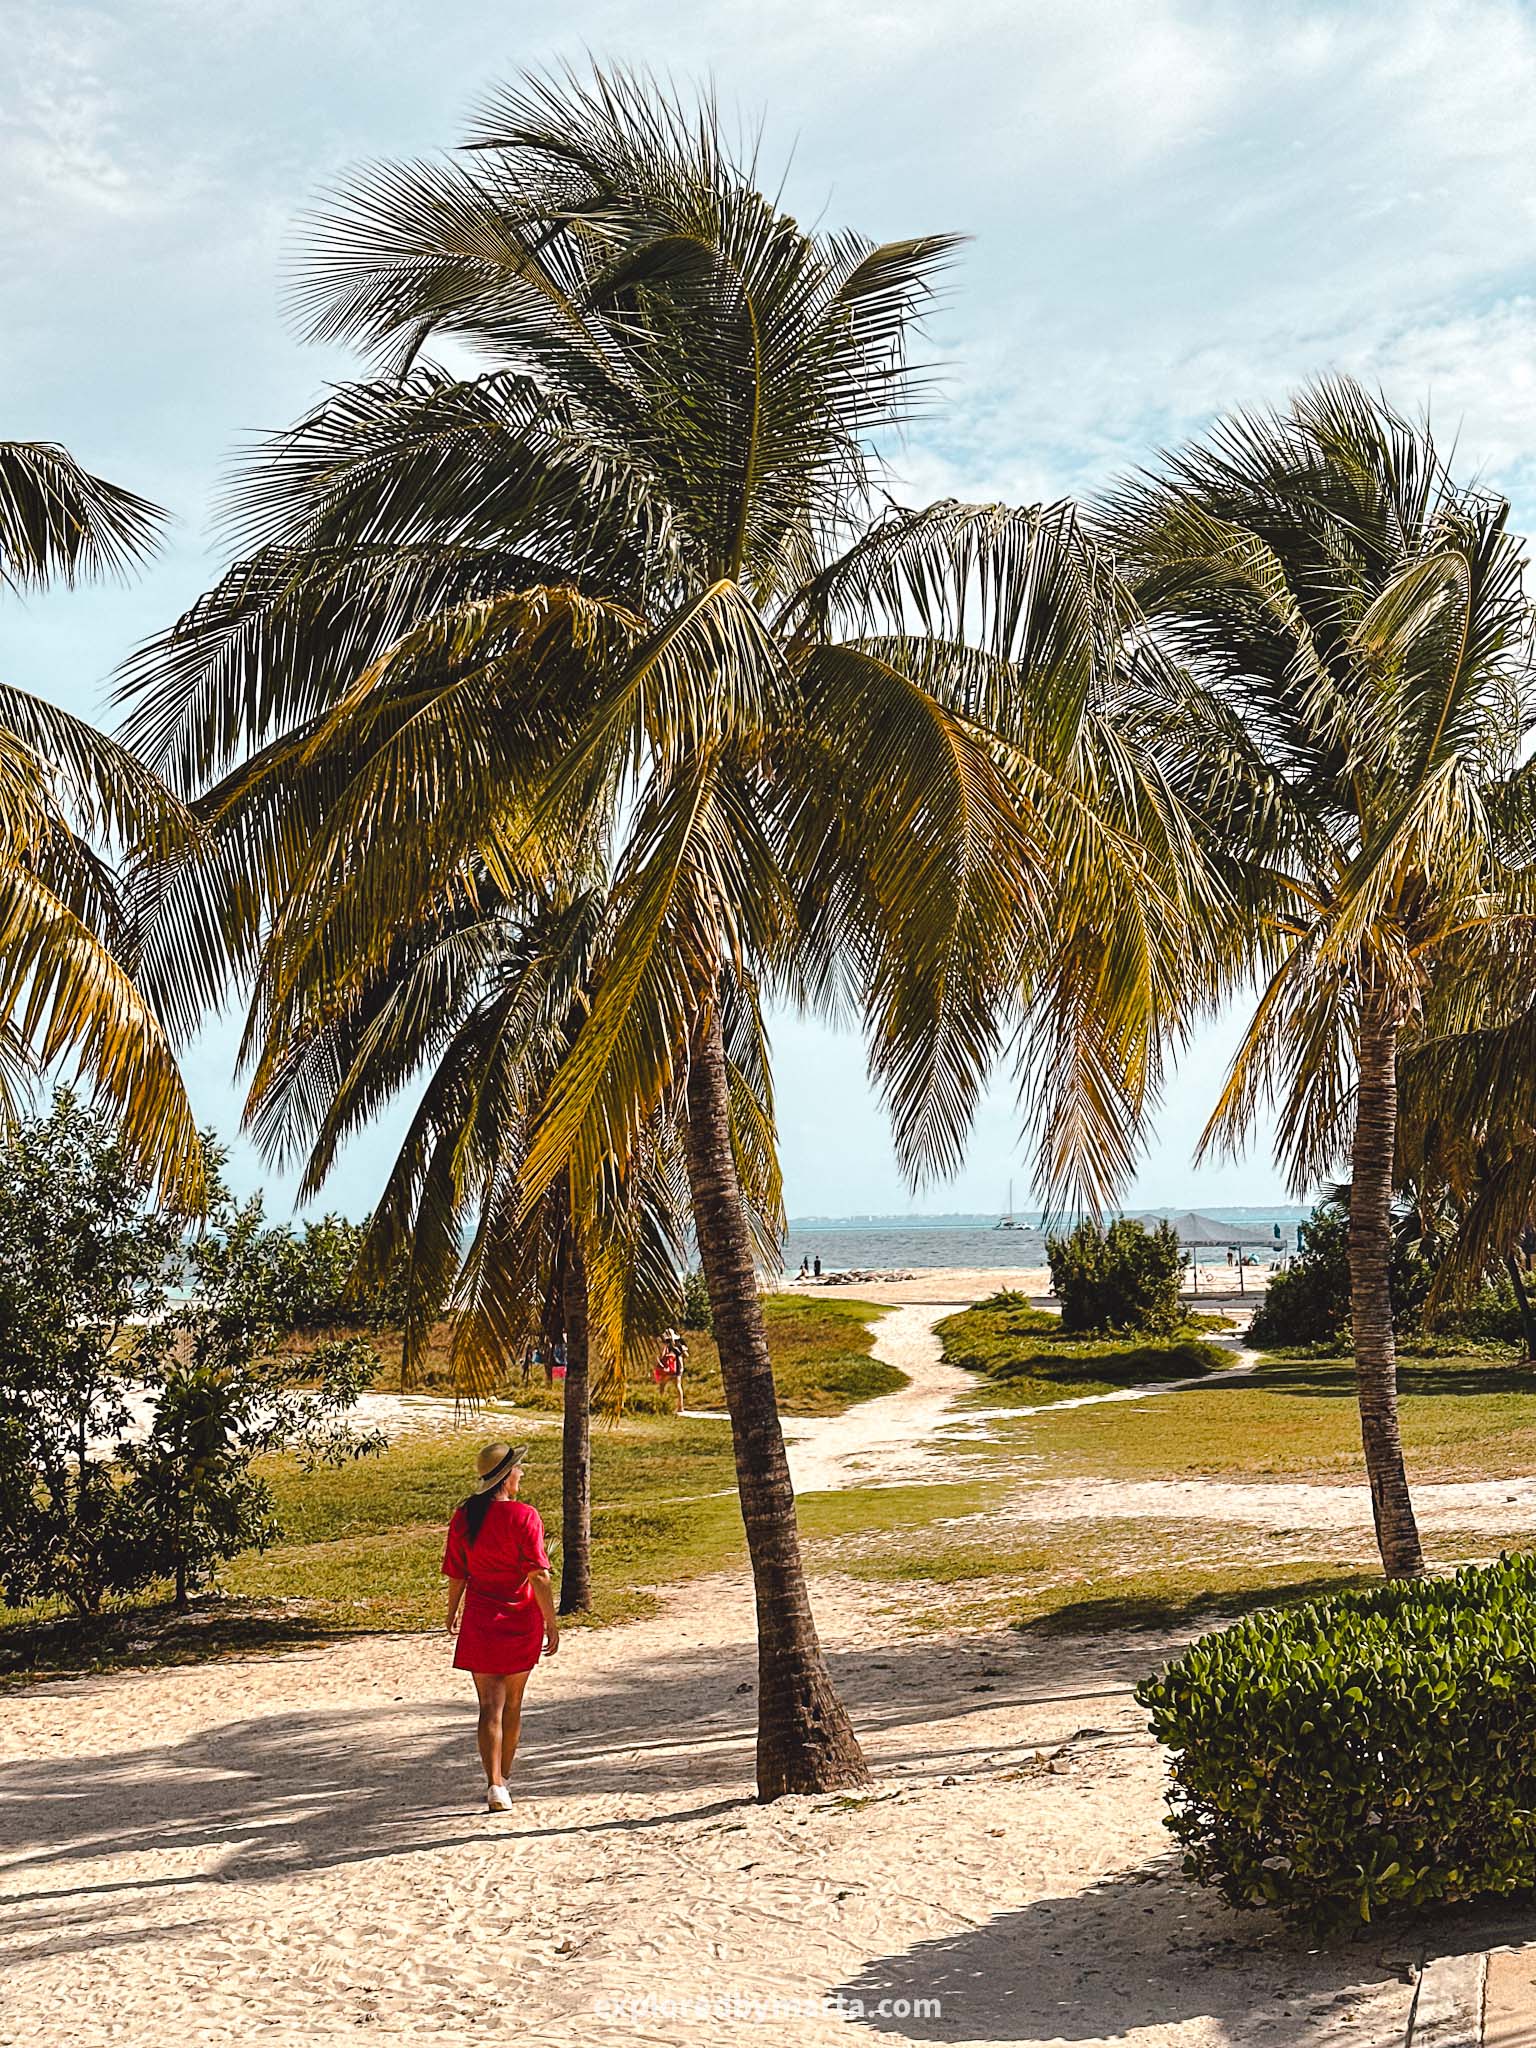 Best Instagram spots in Cancun, Mexico - Playa Langosta